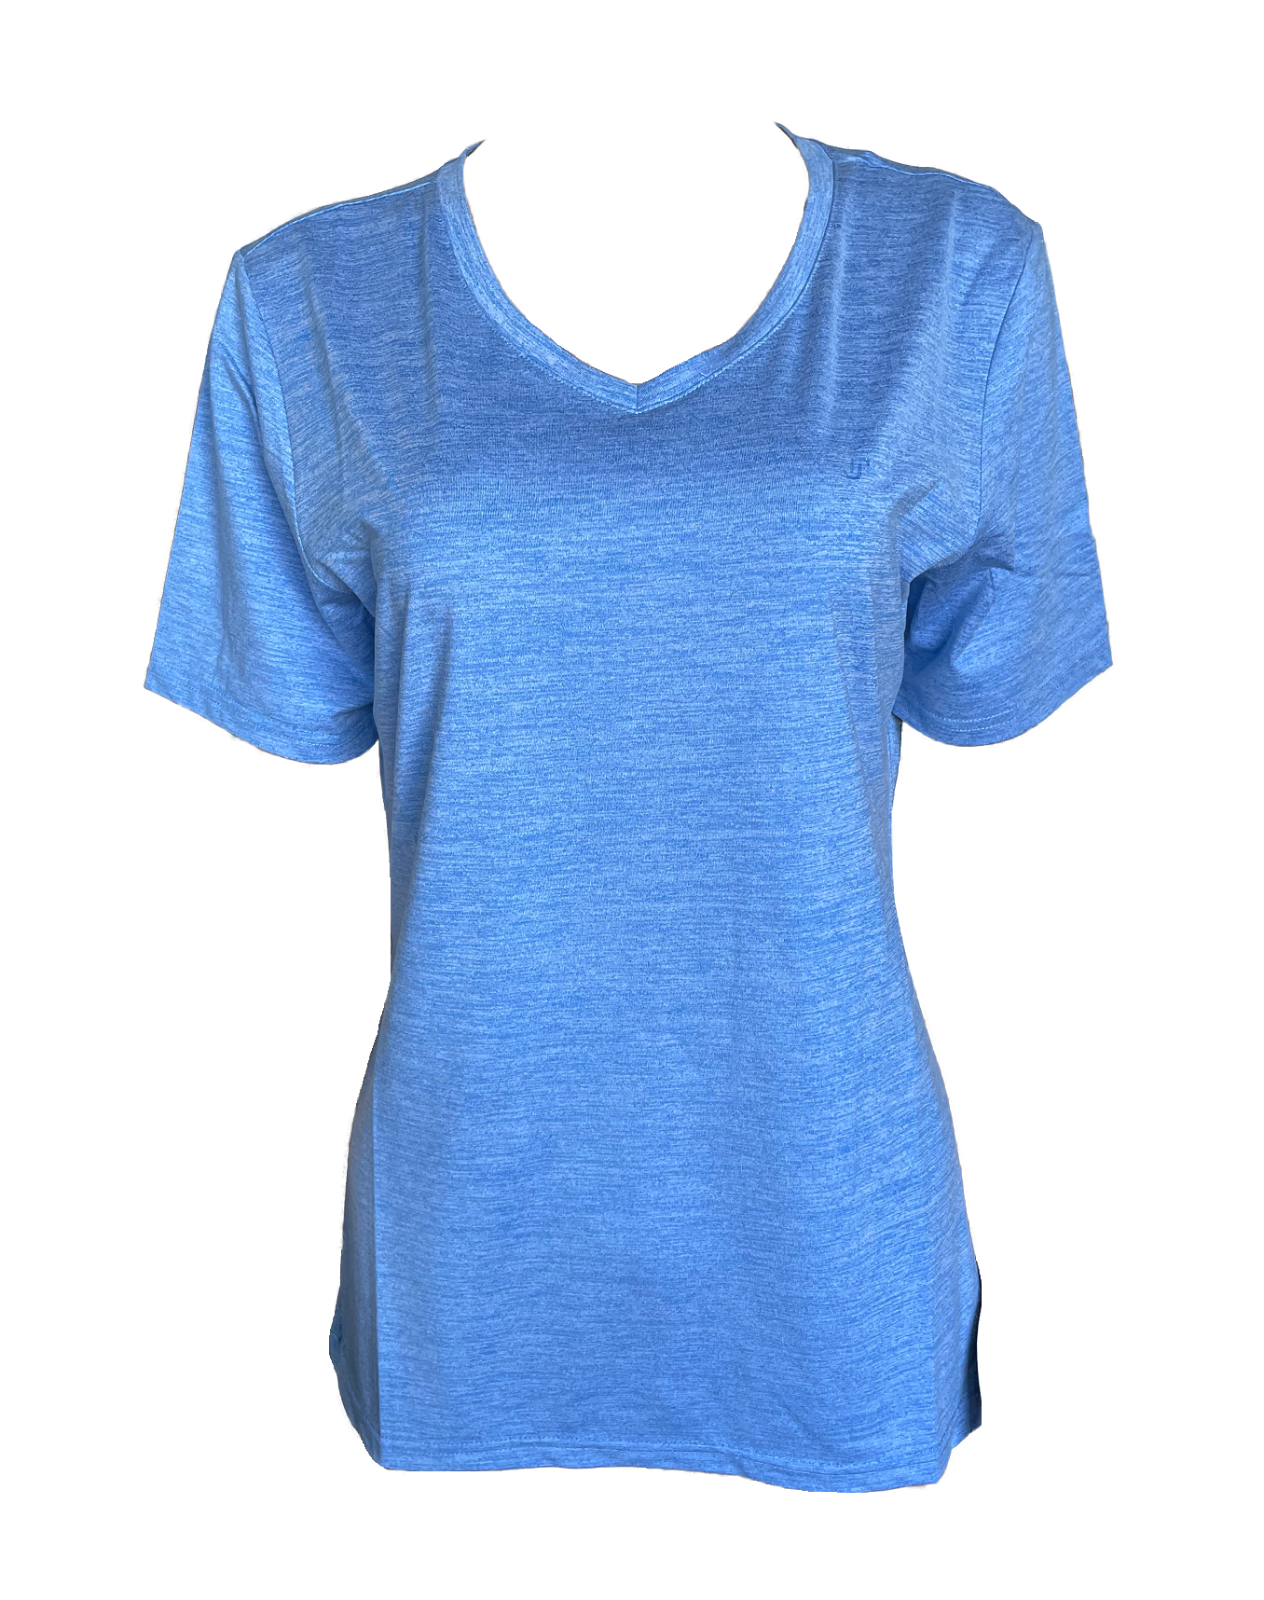 JOY Damen T-Shirt ZAMIRA Sportshirt Kurzarm Blau Grün Gr. 40 42 44 46 –  WWT-Handel